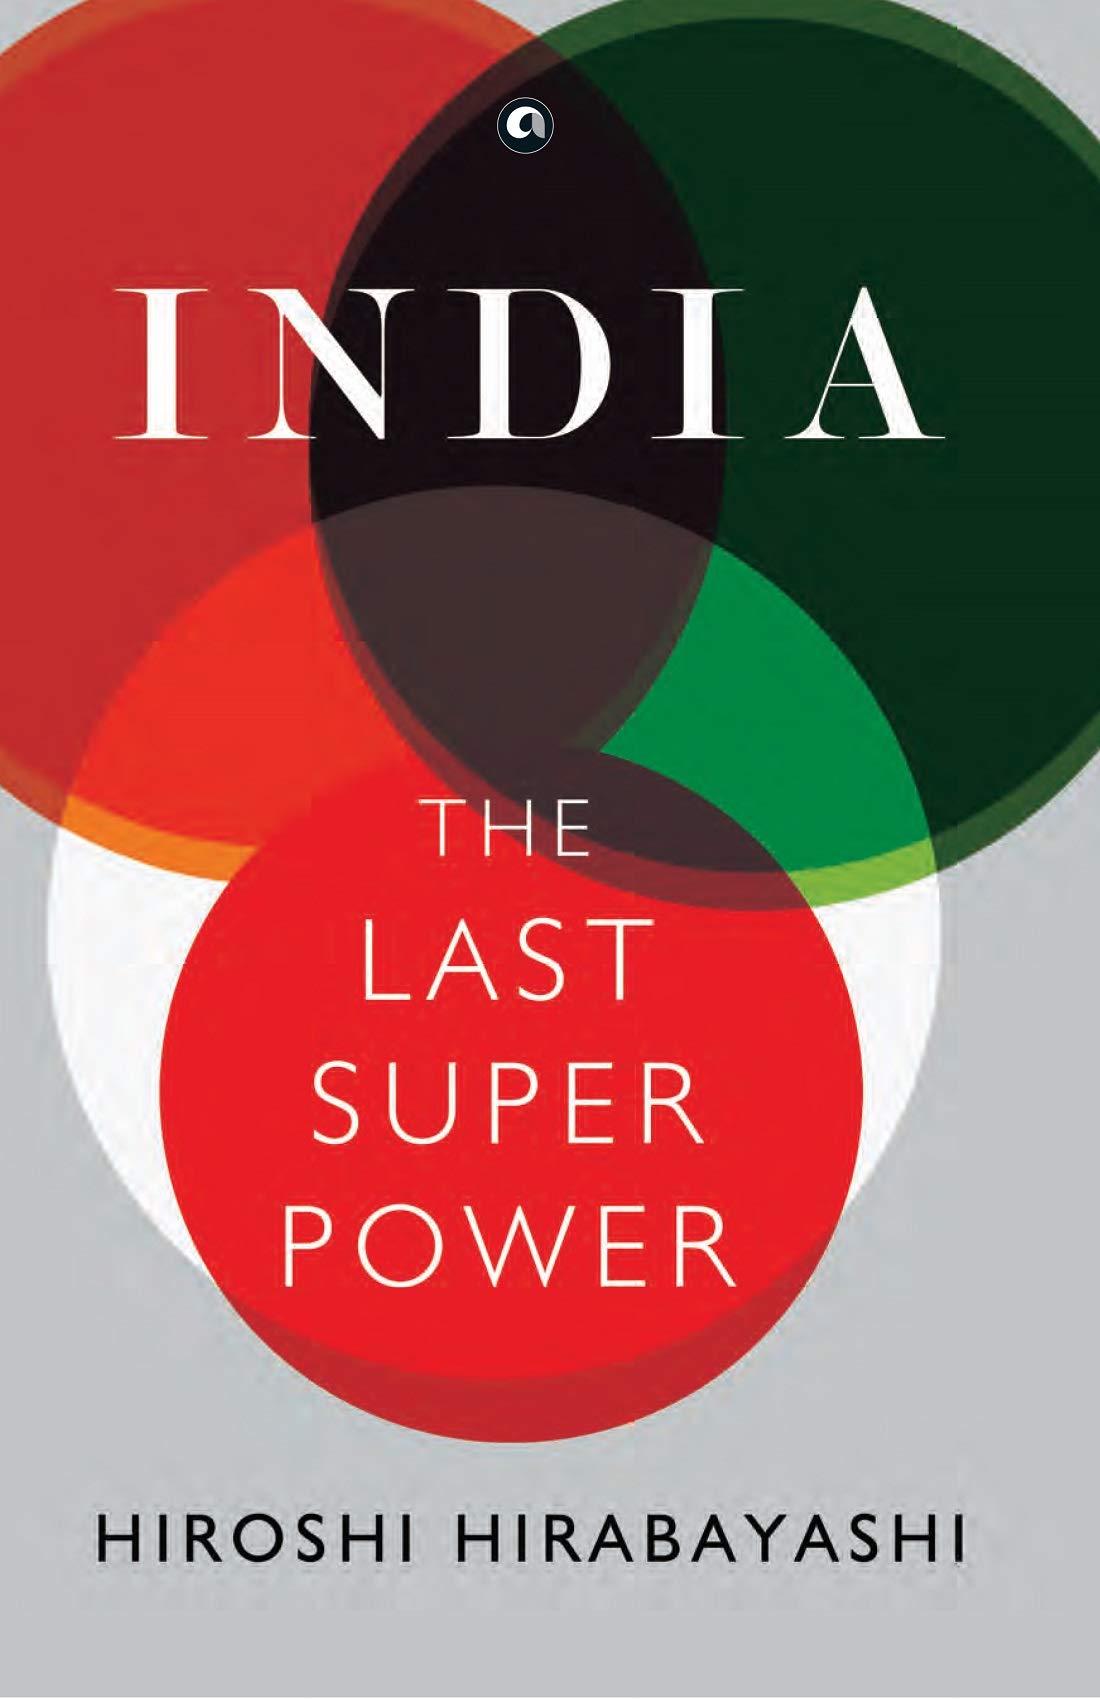 INDIA THE LAST SUPER POWER